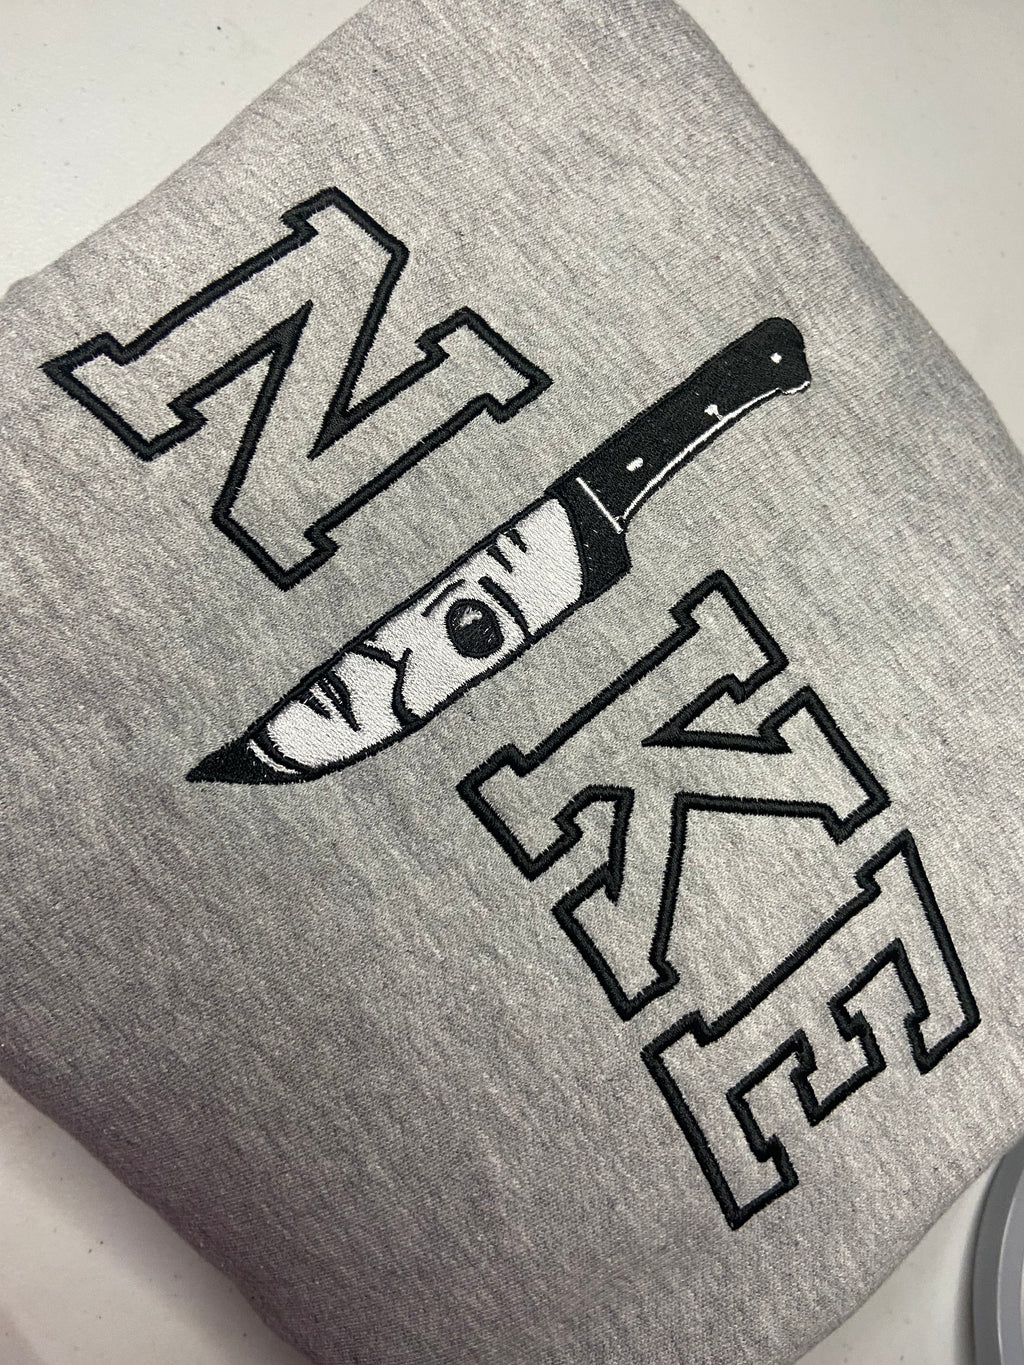 Michael Embroidered NKE sweatshirt